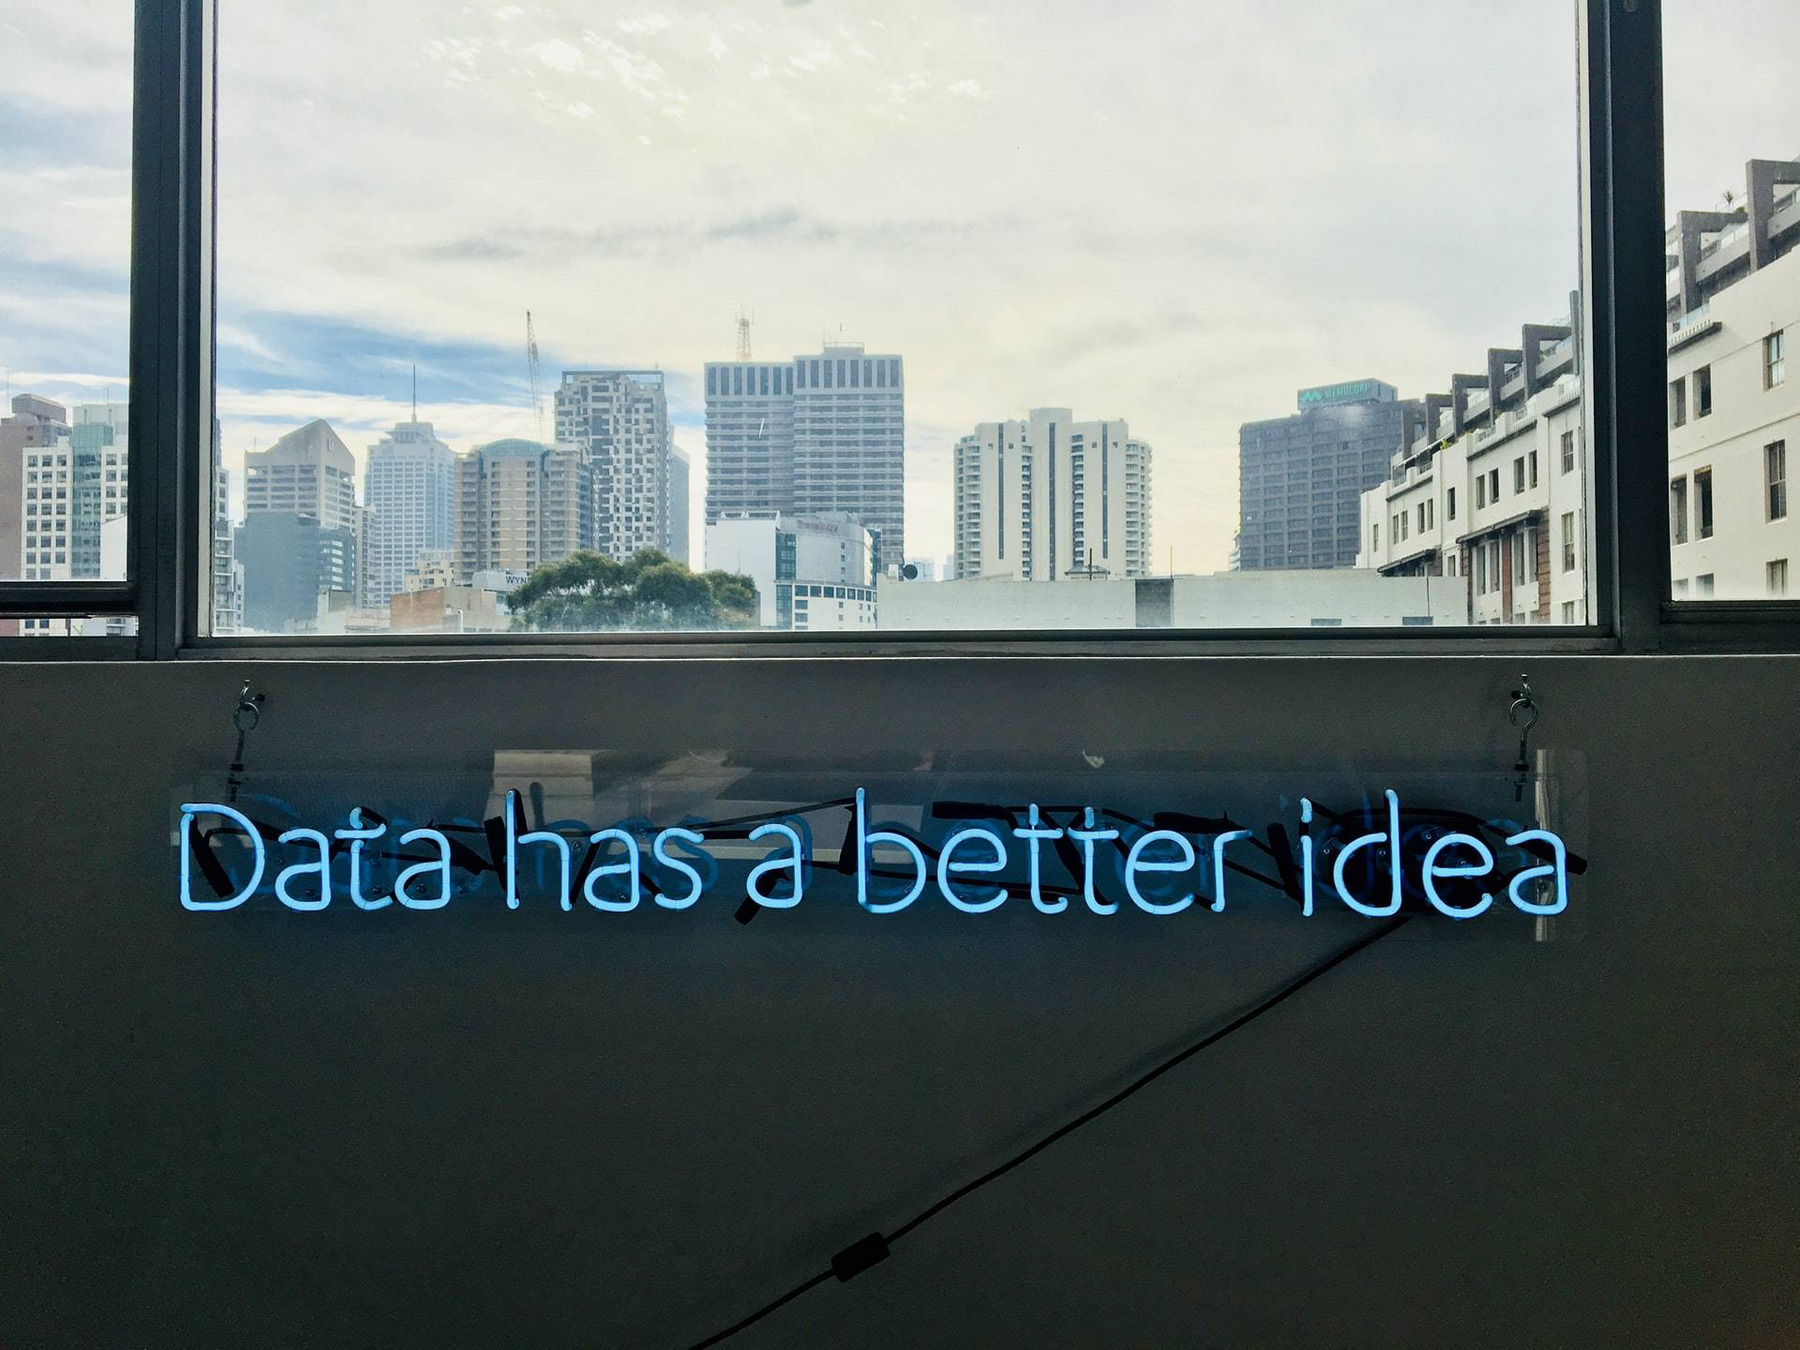 Ein blaues Neonschild im Büro: "Data has a better idea."